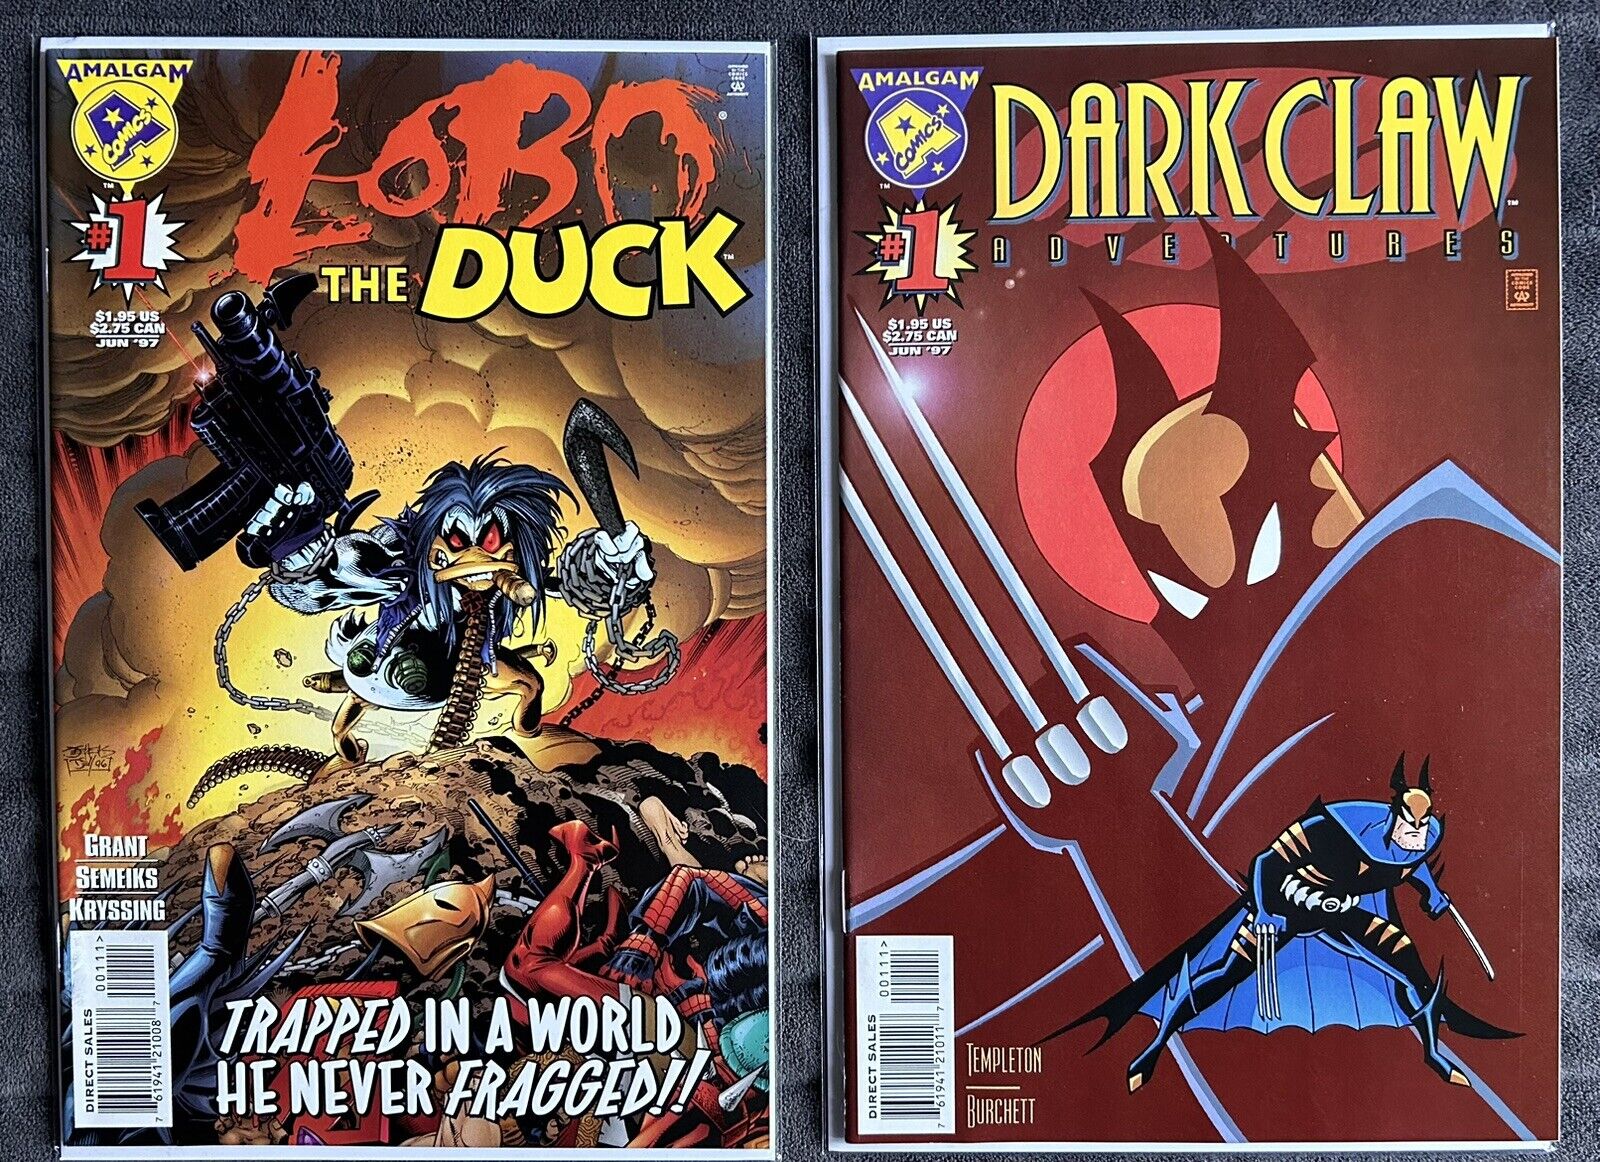 🔥🔥Dark Claw Adventures #1 Lobo The Duck Amalgam DC/Marvel Comic 1997🔥🔥